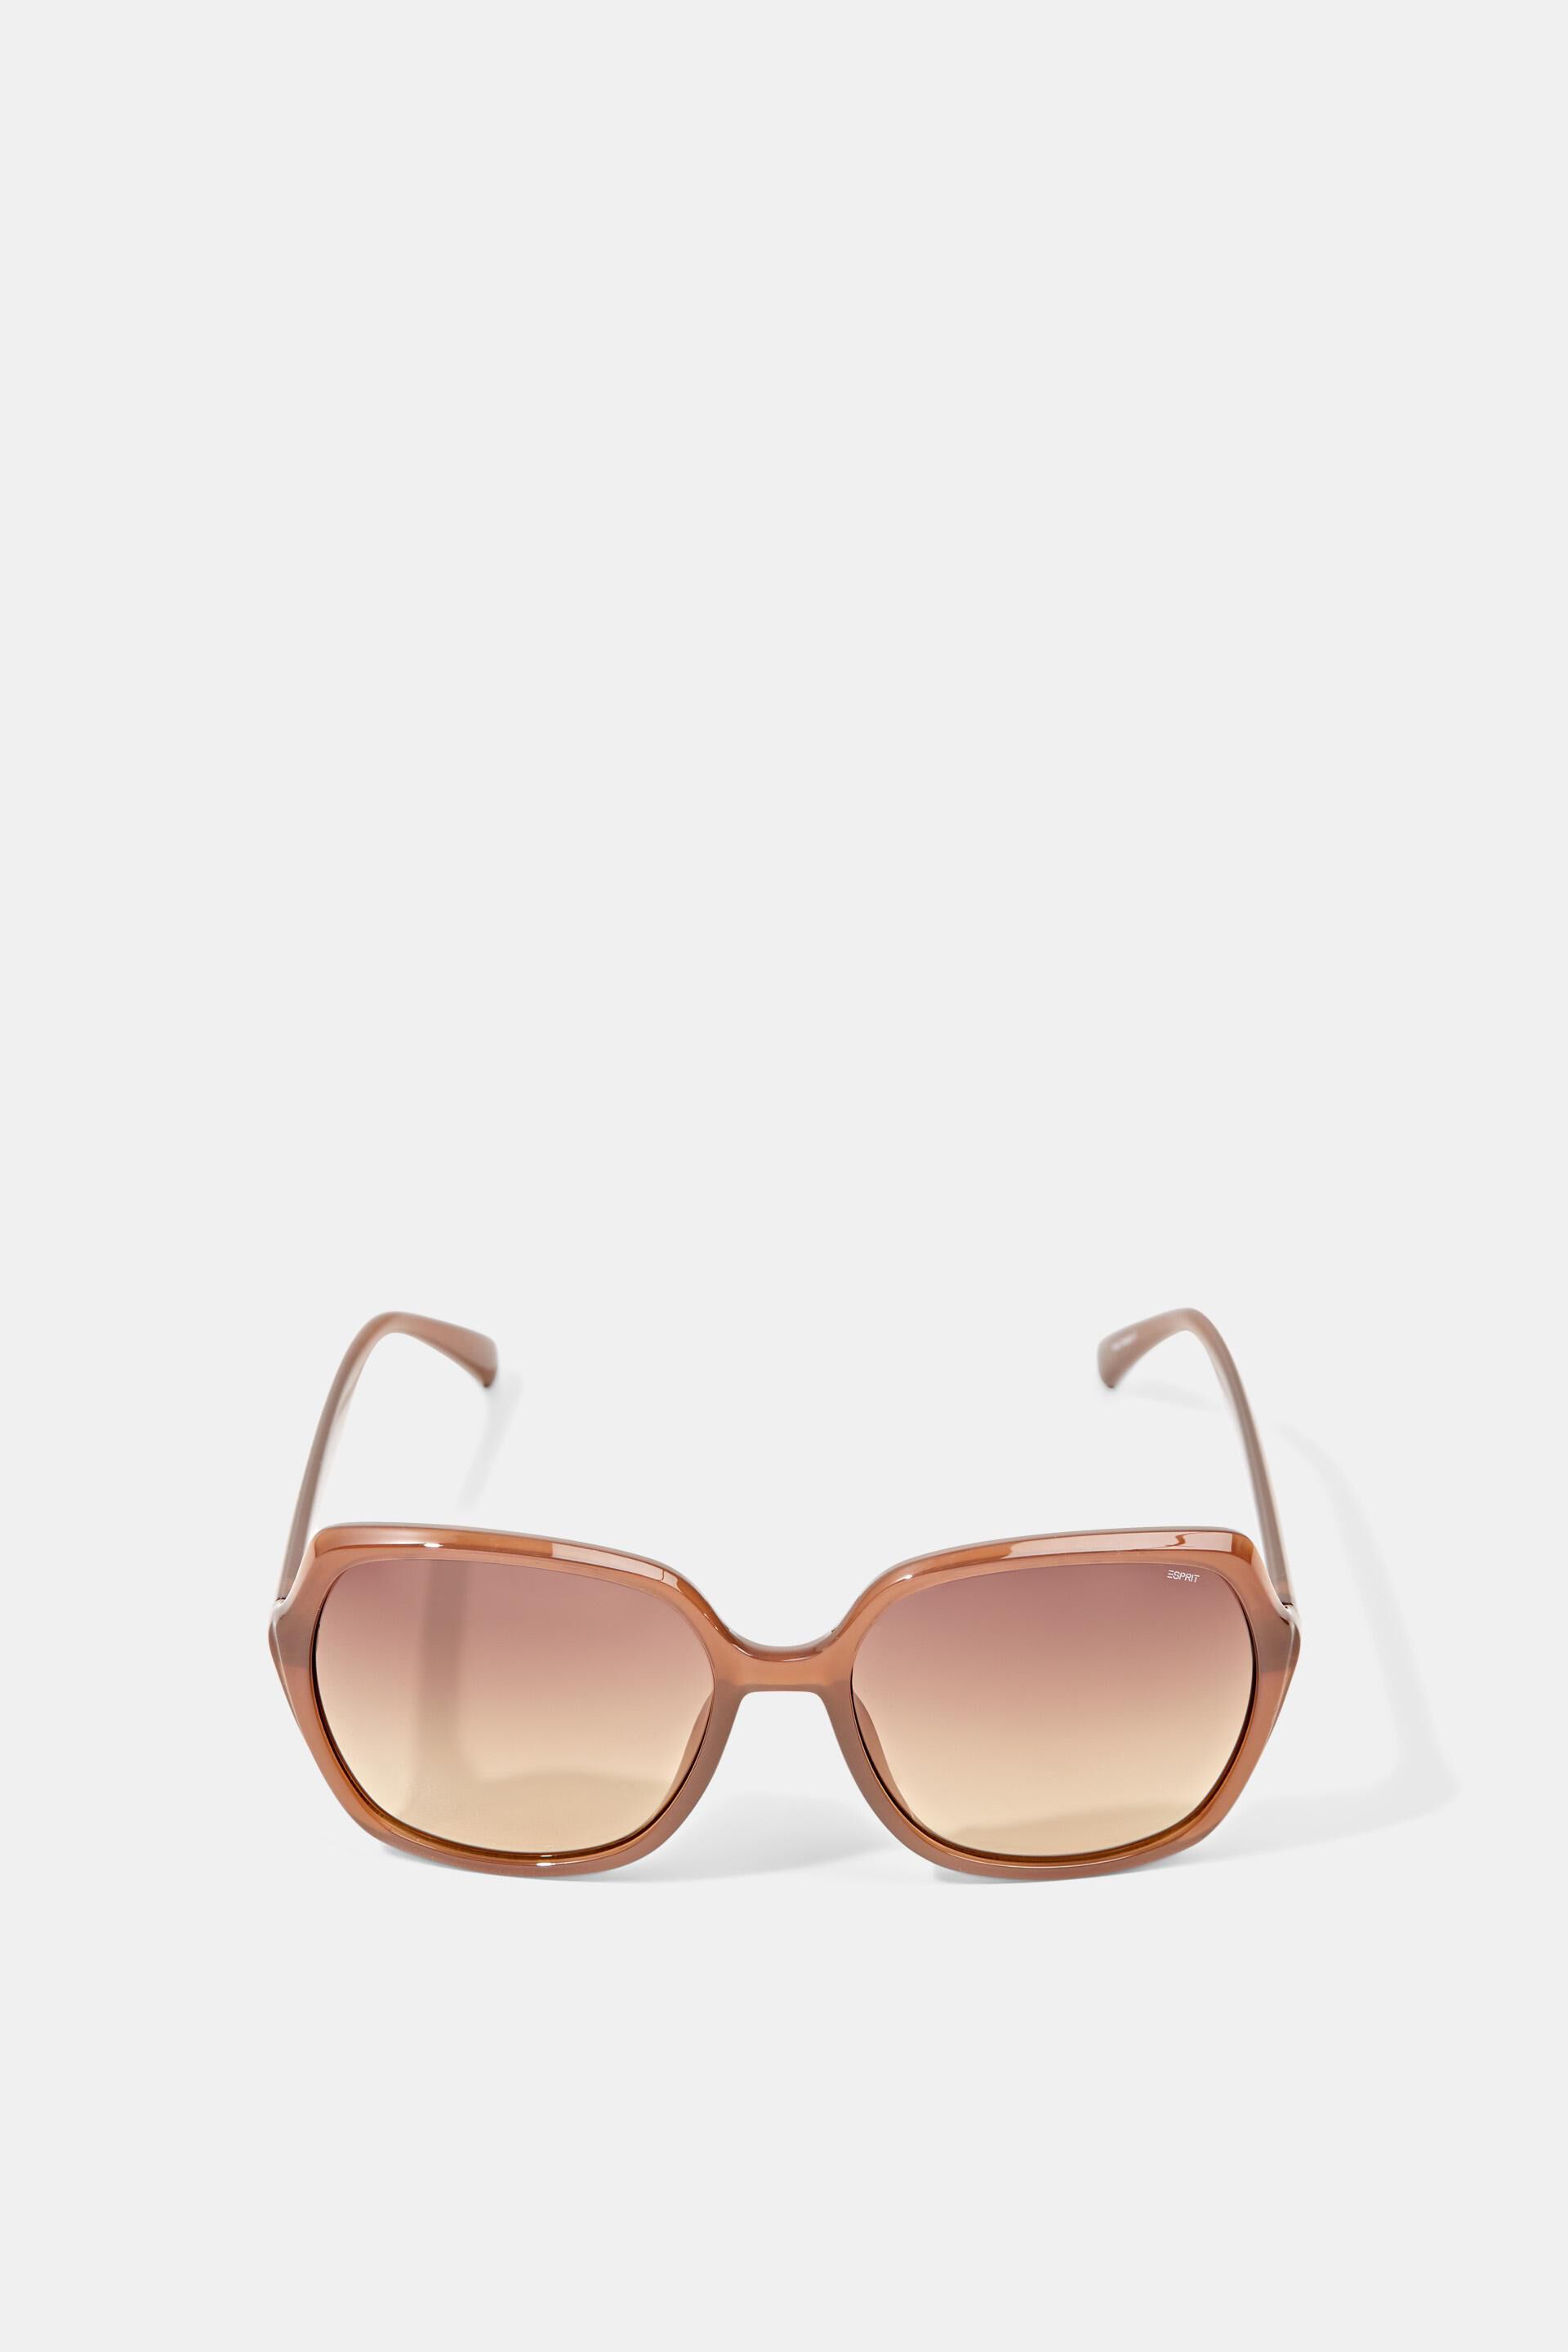 Esprit Statement lenses large with sunglasses